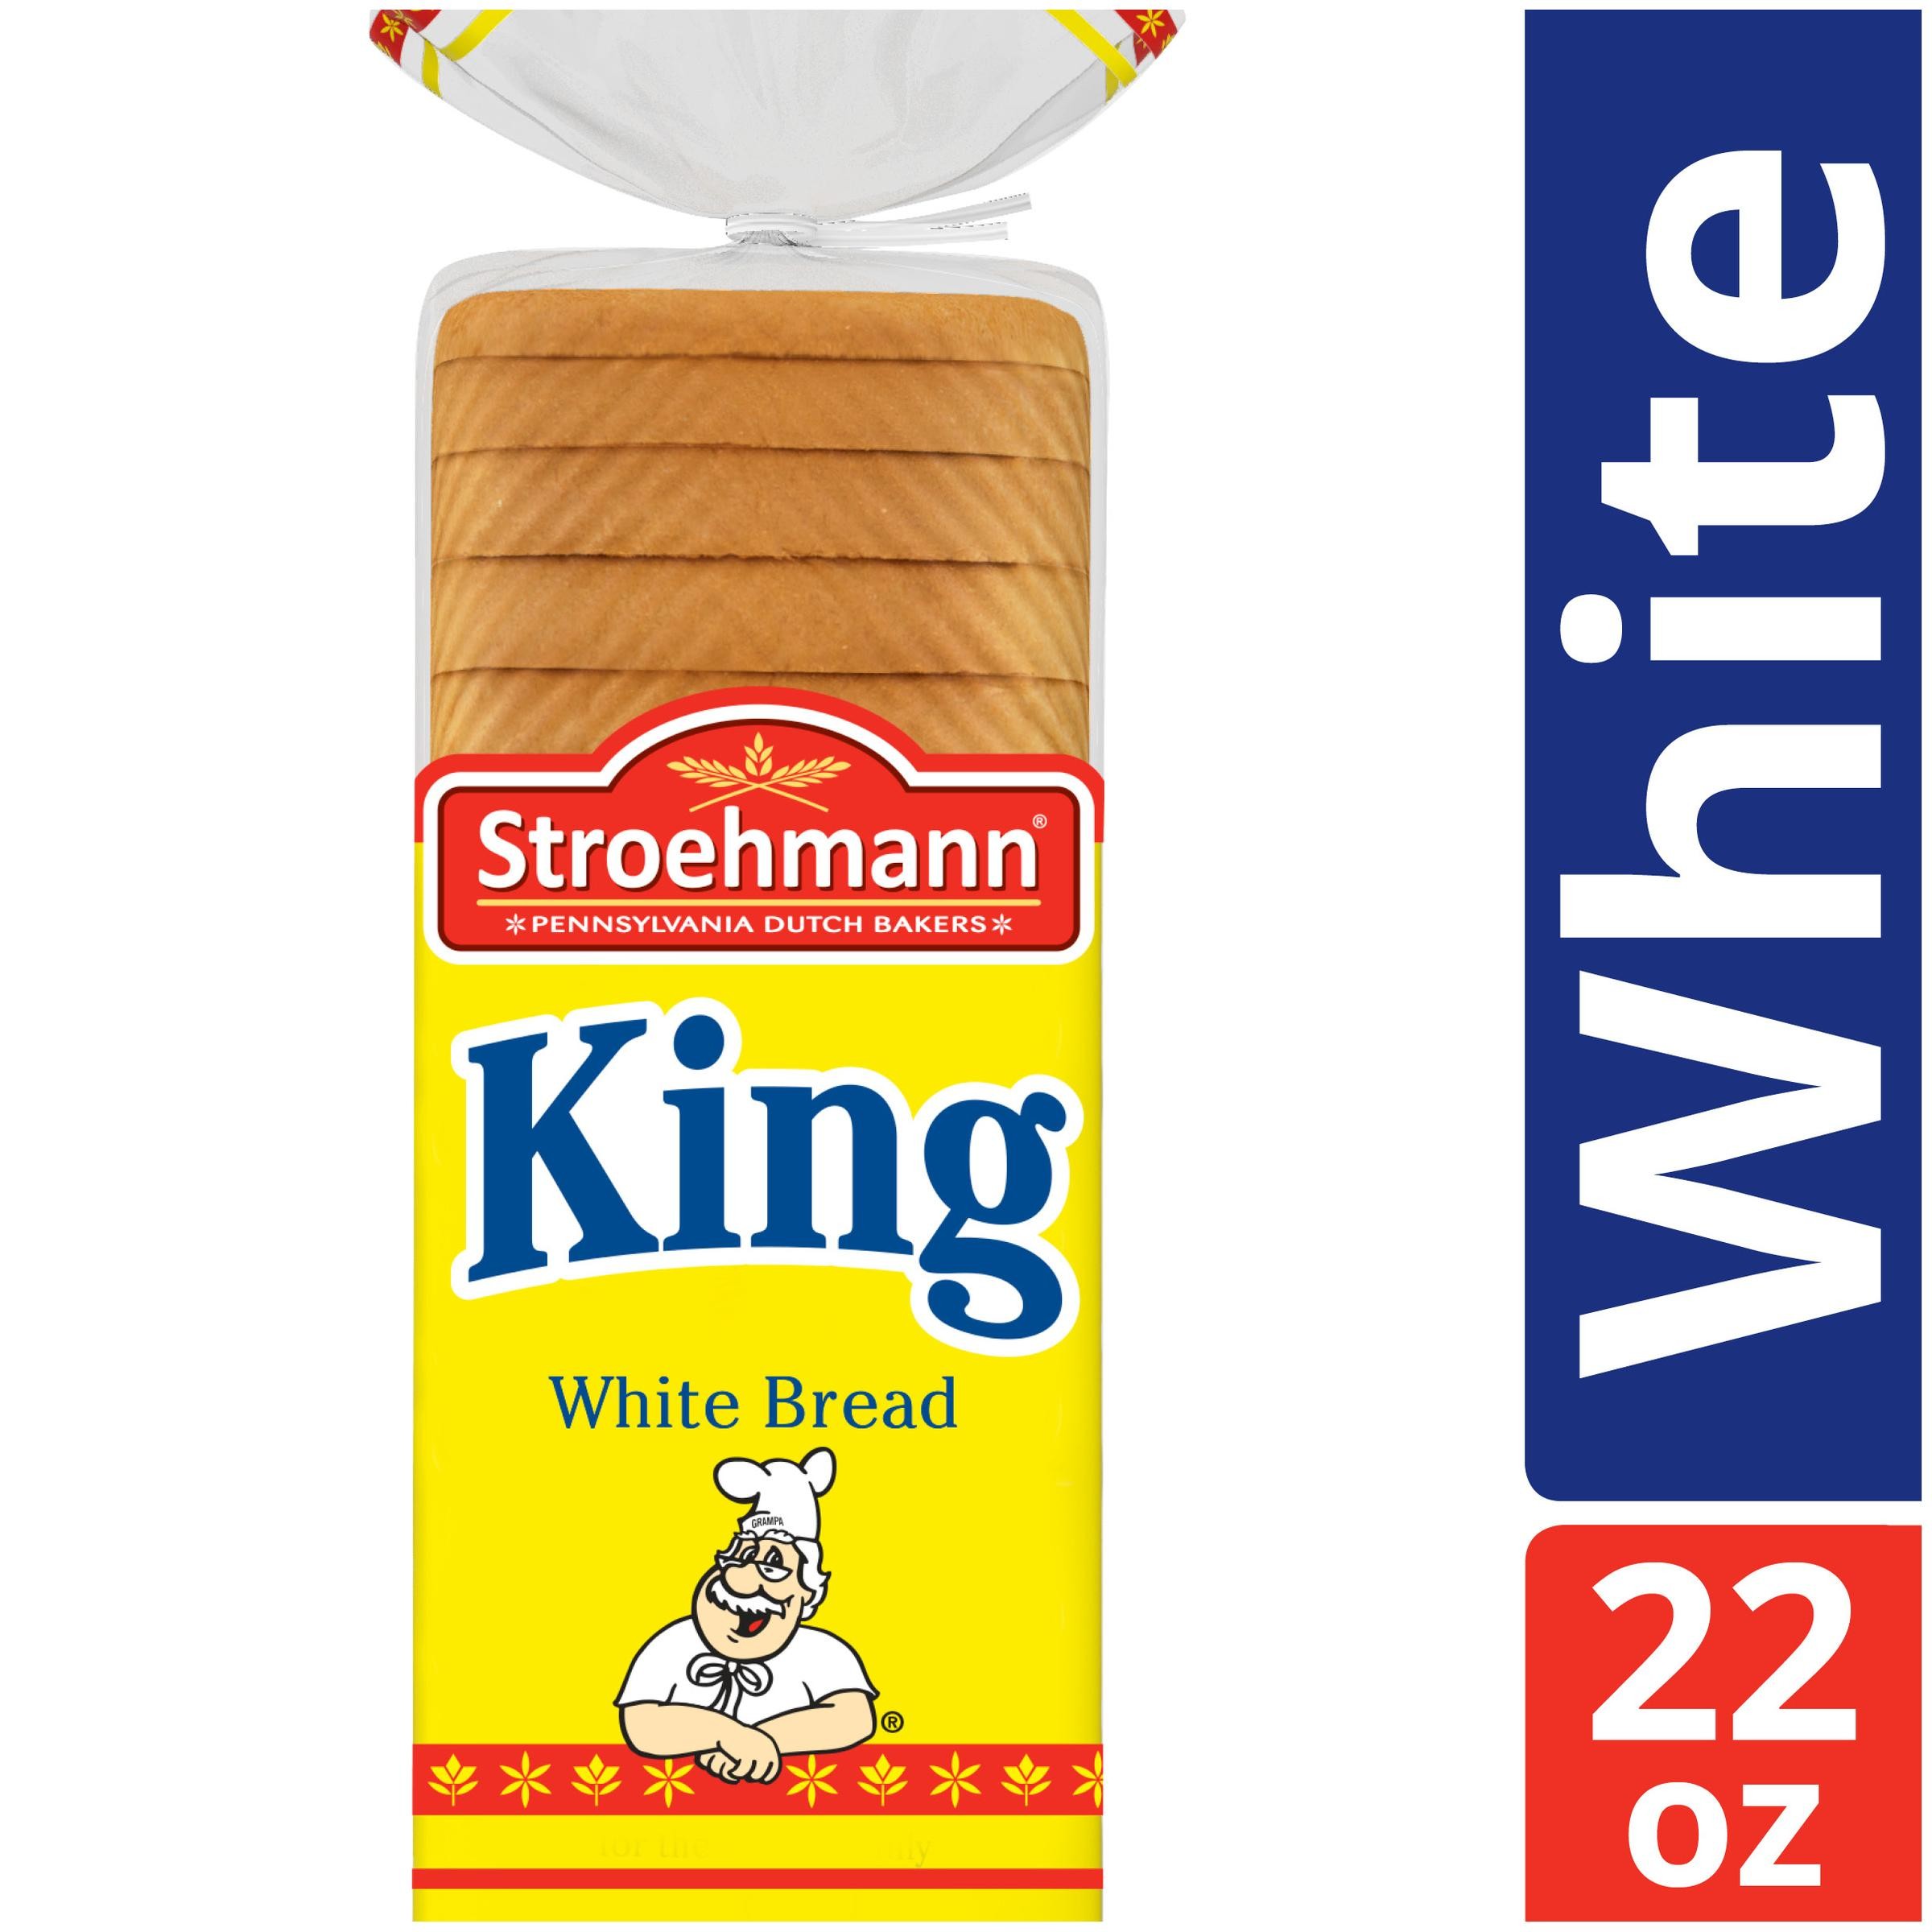 STROEHMANN KING BREAD 1 LB. 6 OZ.